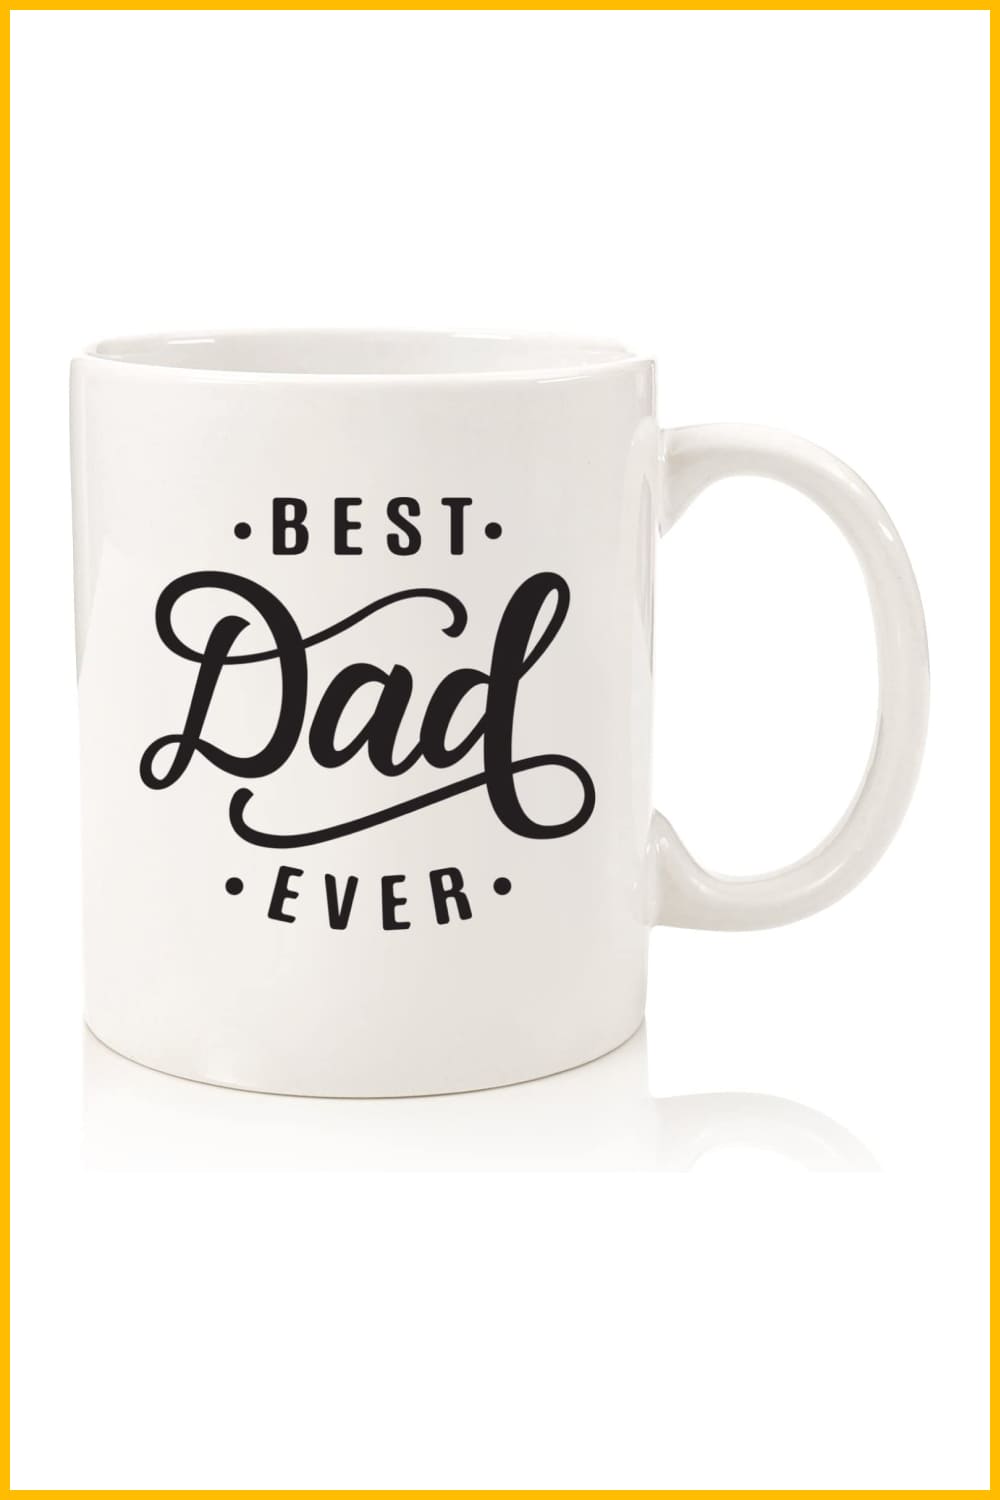 White Best Dad Ever Coffee Mug.